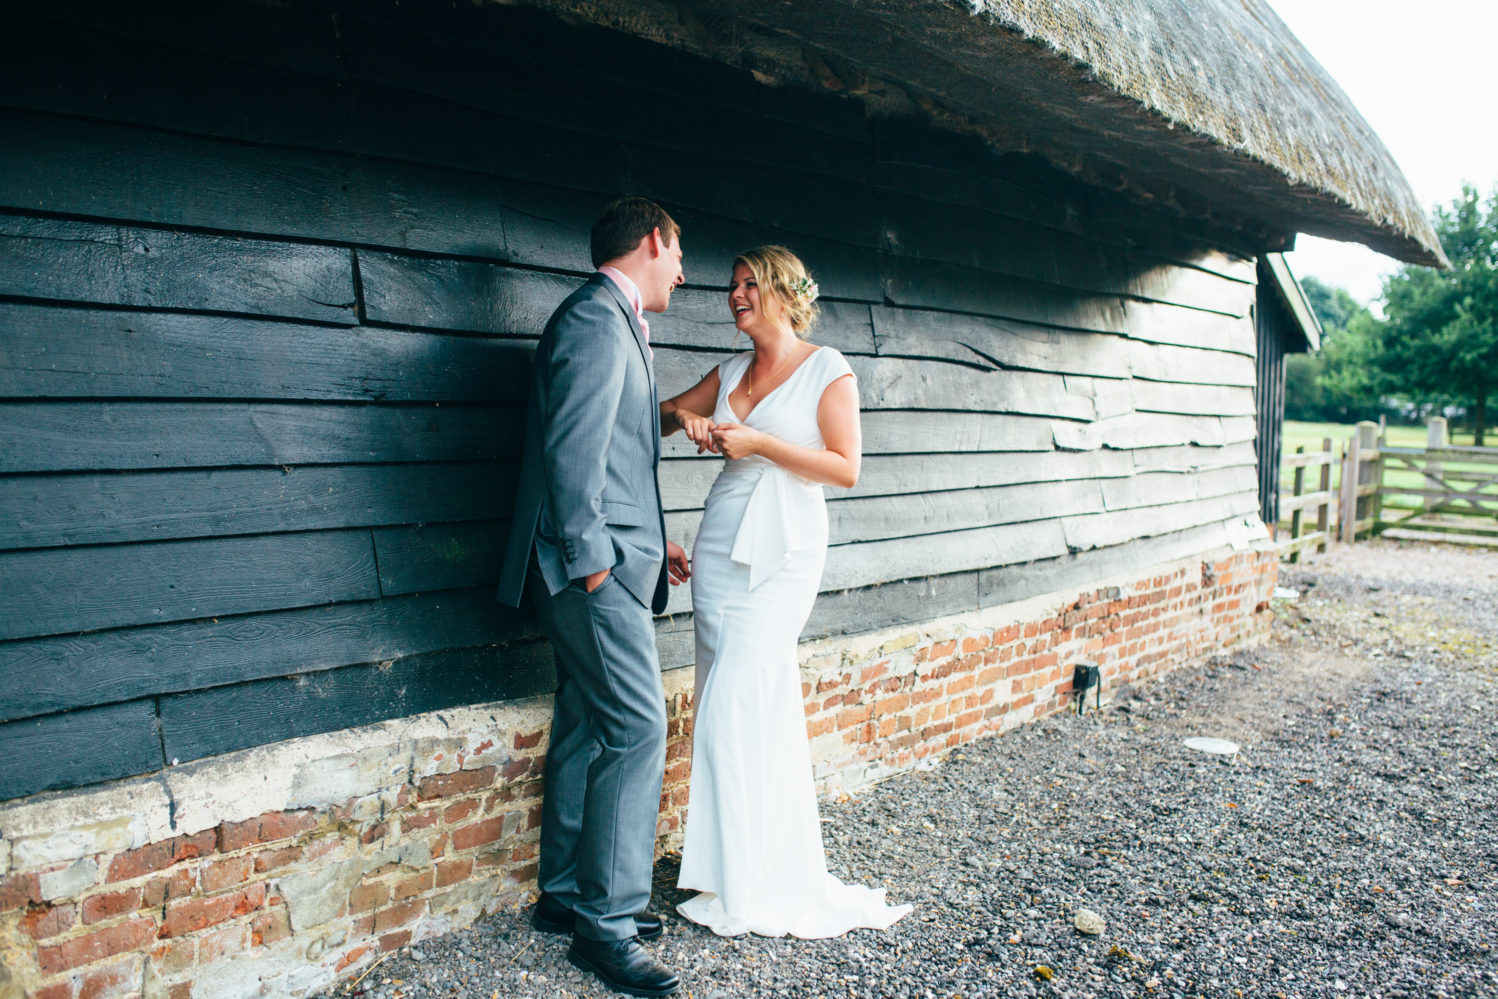 wedding photography at blackthorpe barn in suffolk